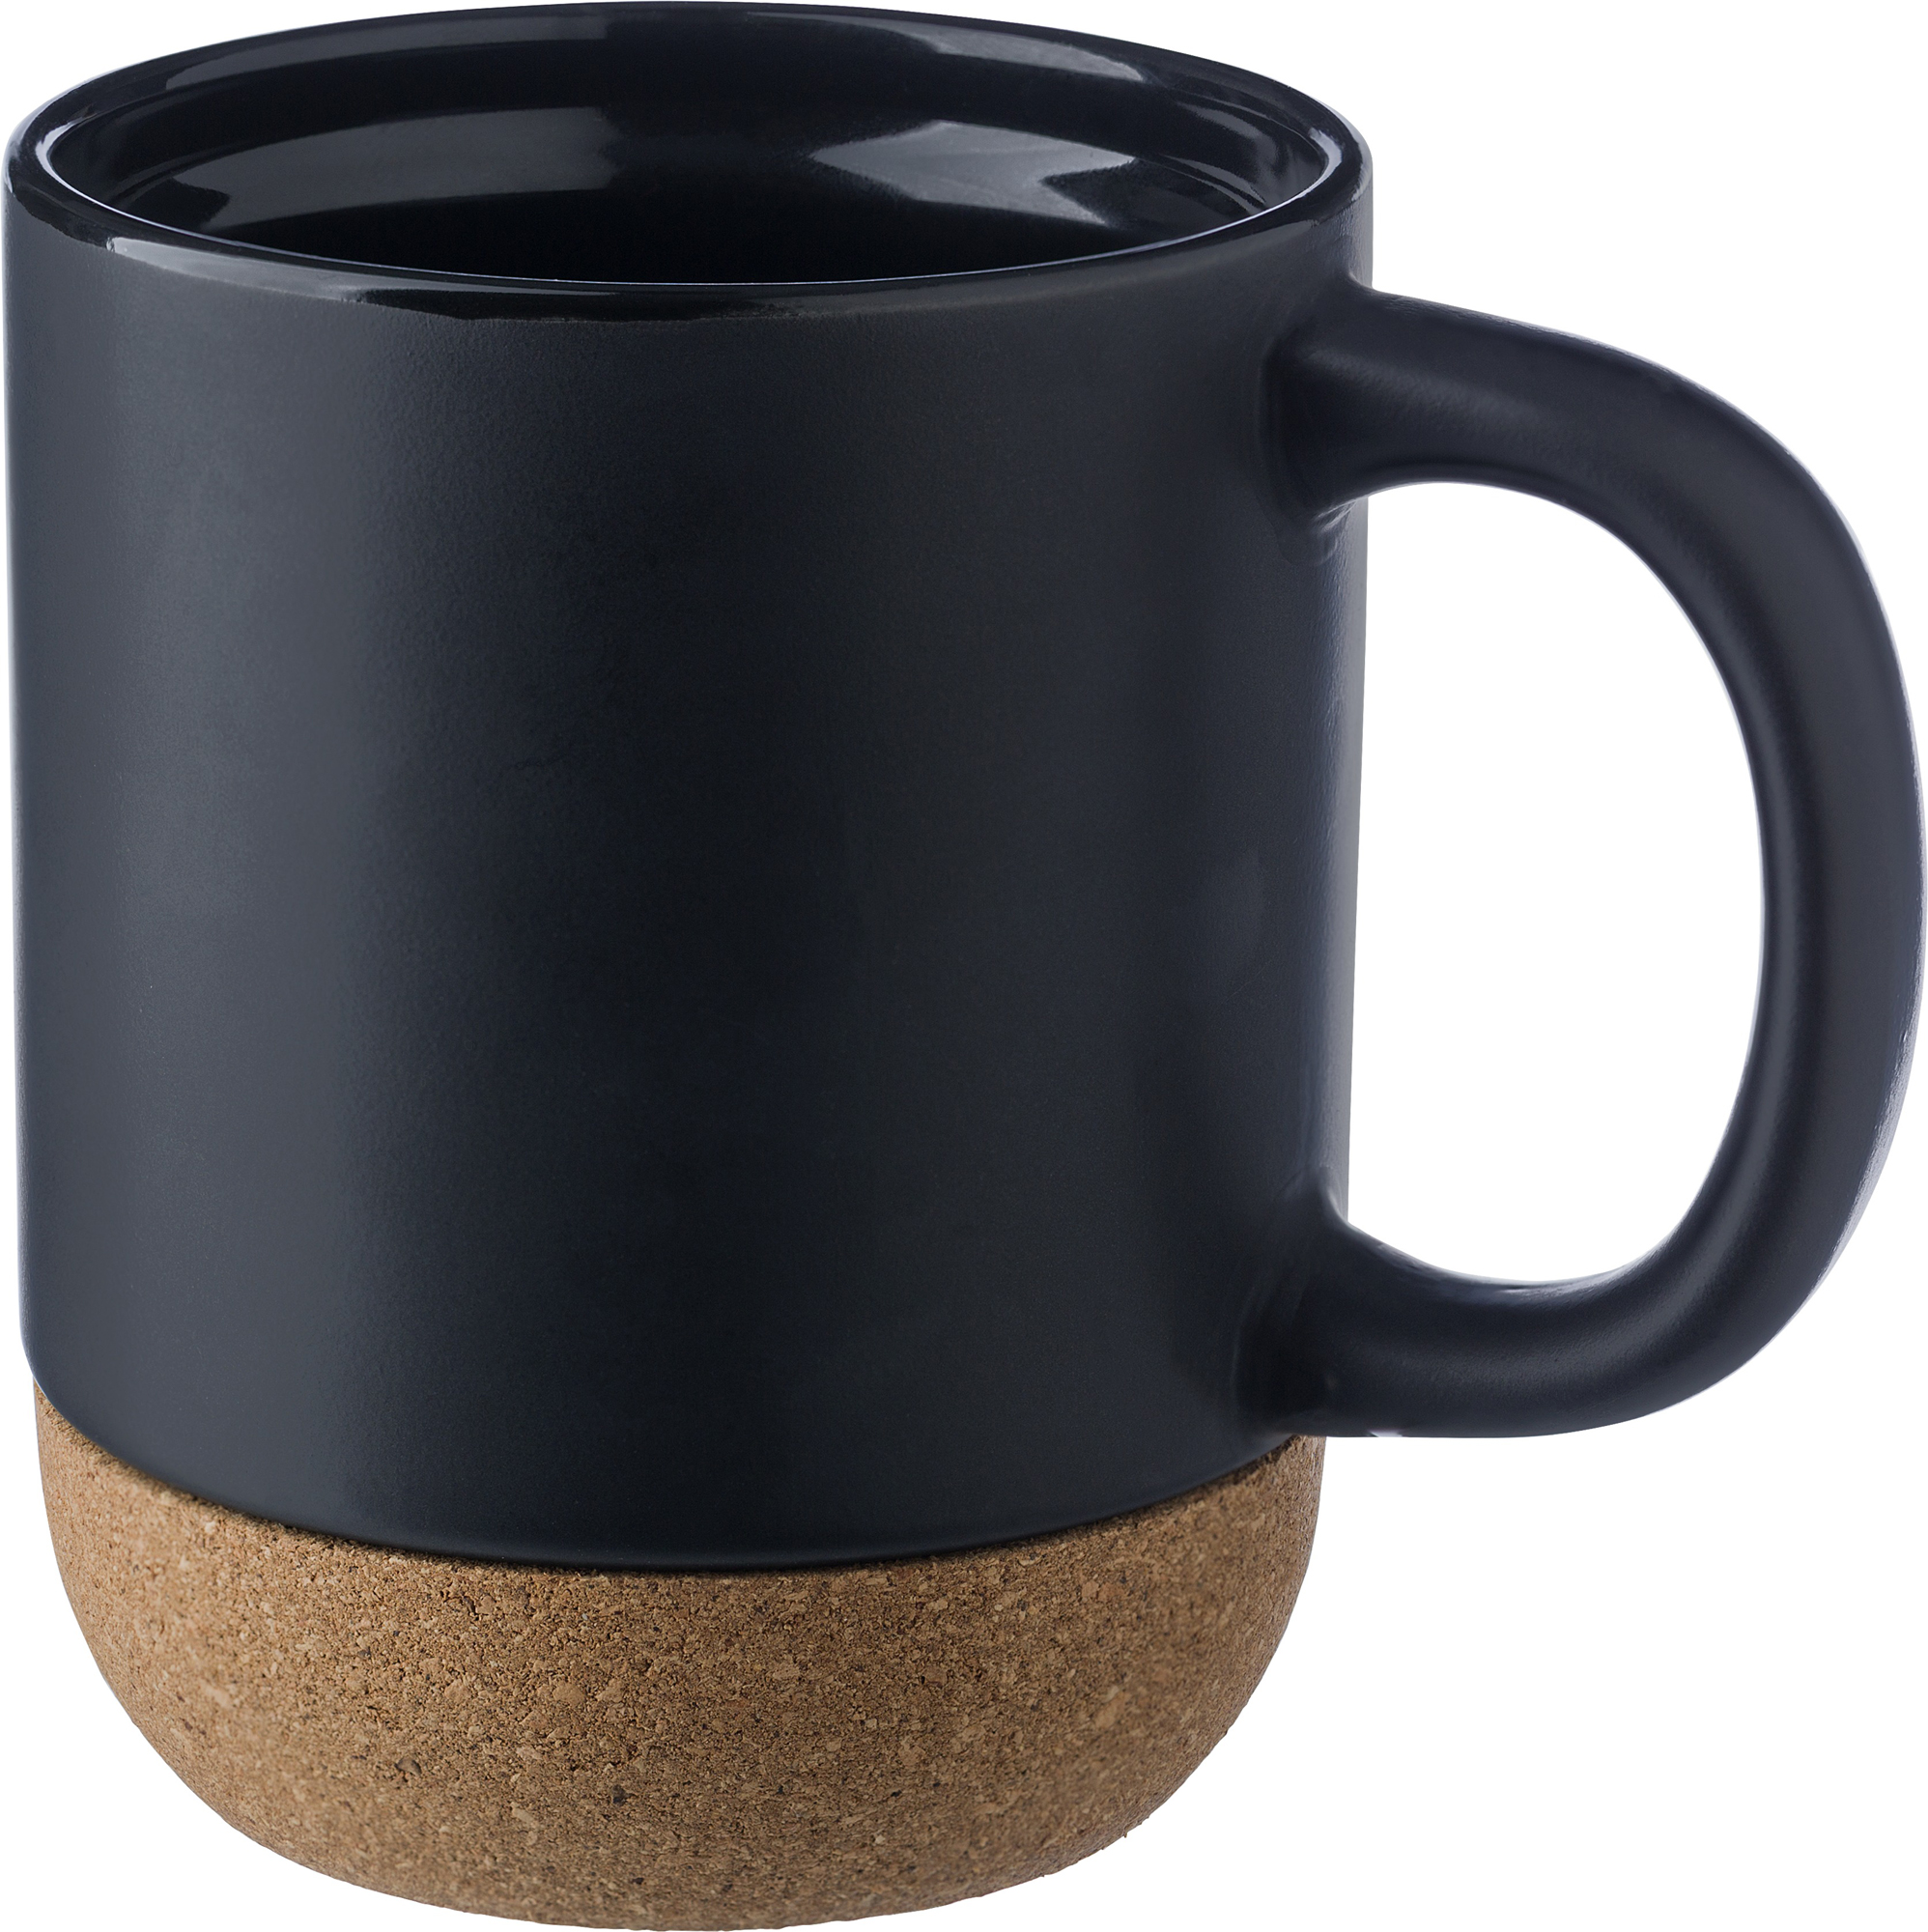 000000864506 001999999 3d045 rgt pro01 2022 fal - Ceramic mug (300ml)